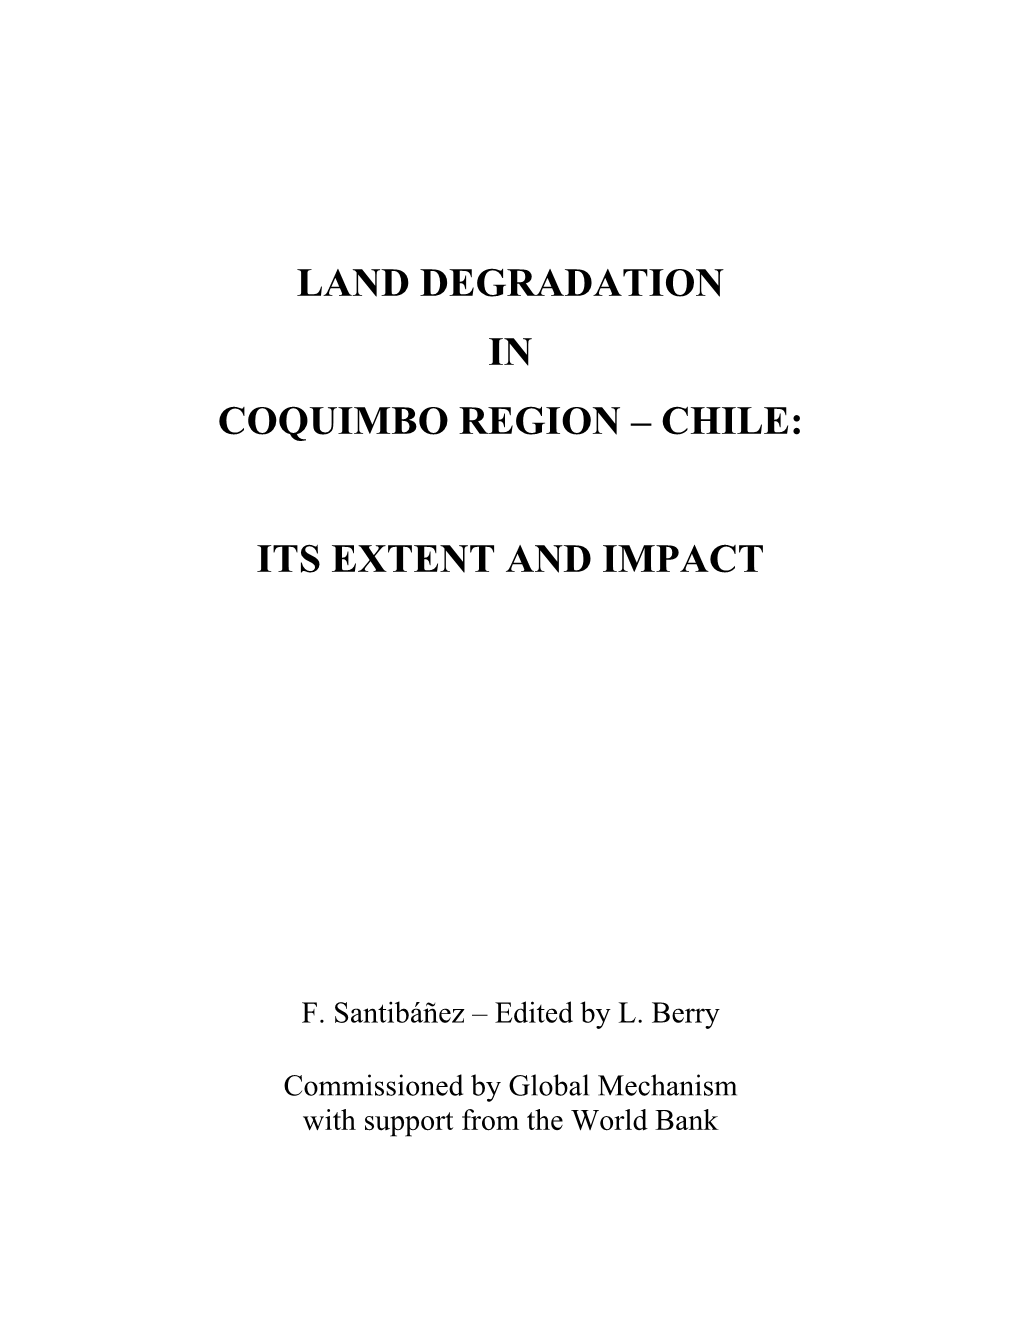 Case Study of Impacts of Land Degradation – Coquimbo Region